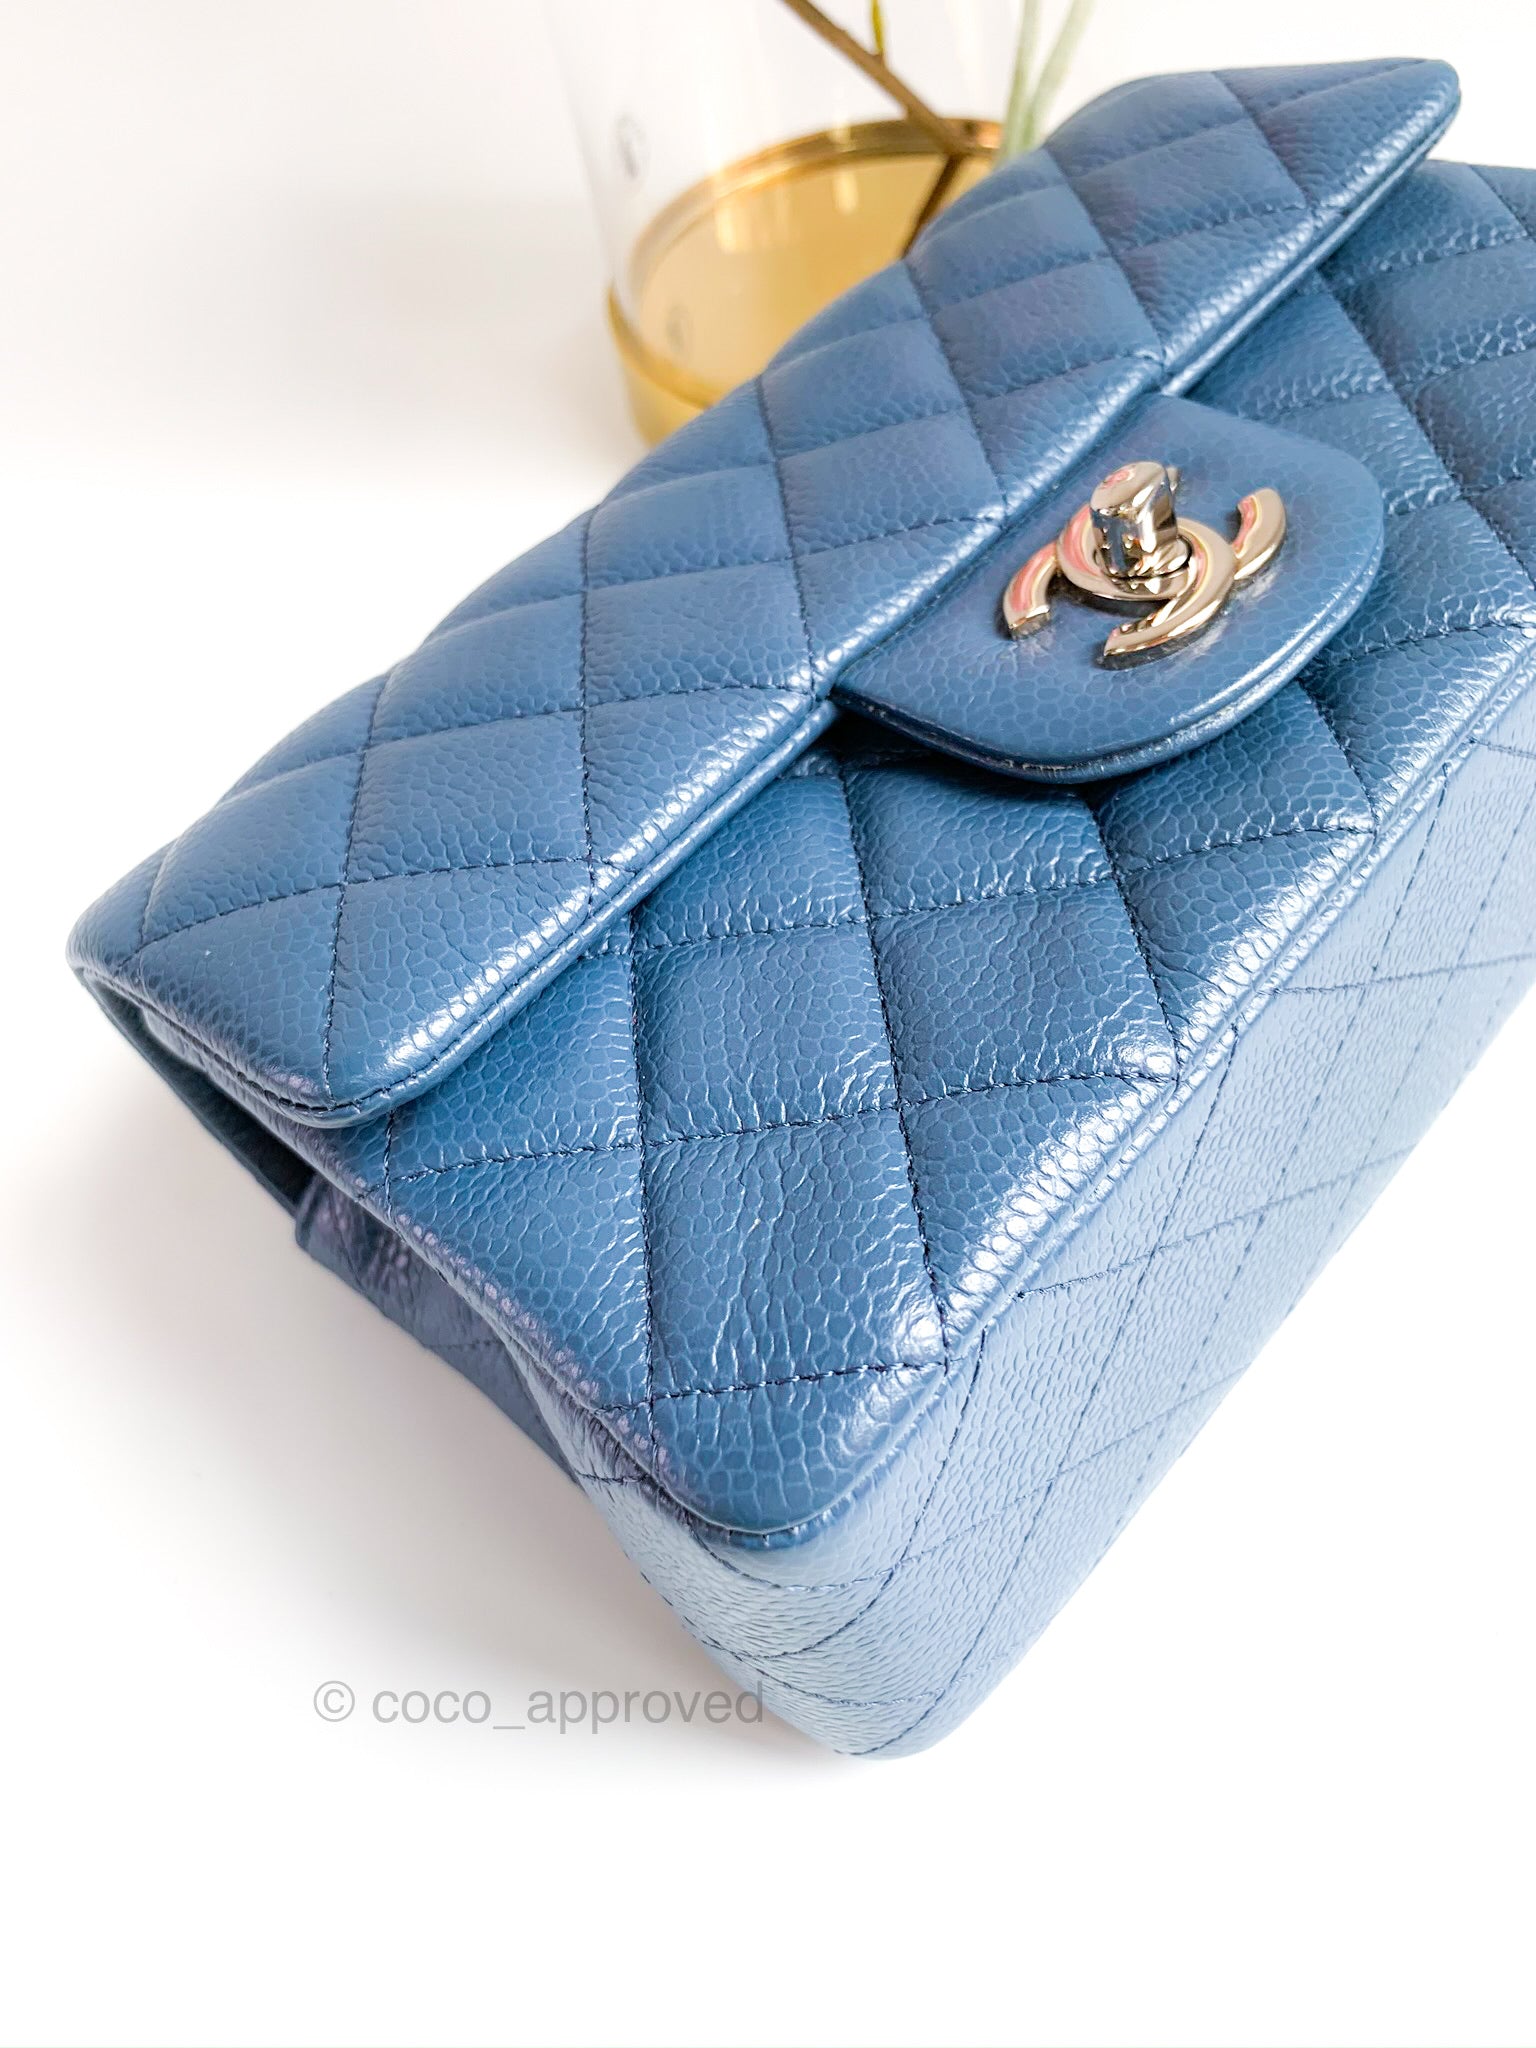 Chanel Navy Blue Caviar Rectangular Mini Classic Flap Bag GHW – Boutique  Patina